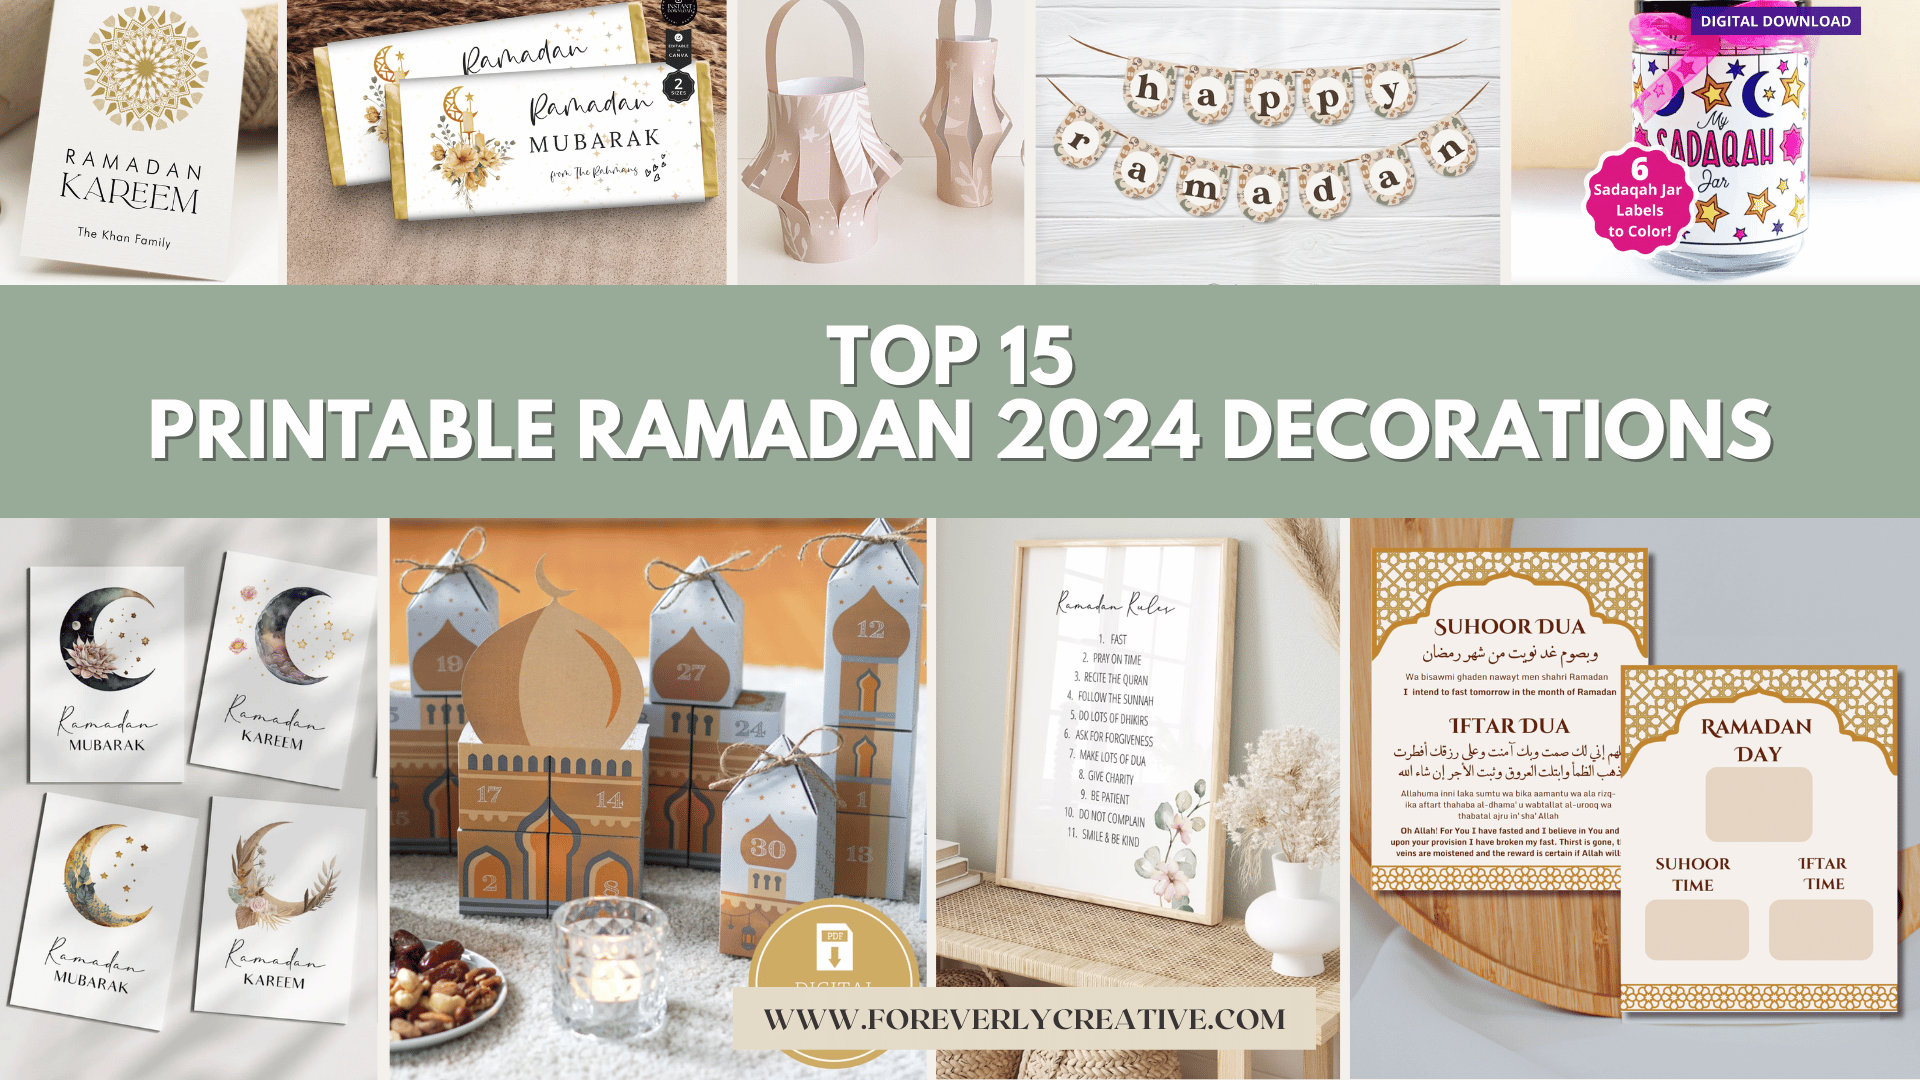 Top 15 Printable Ramadan 2024 Decorations